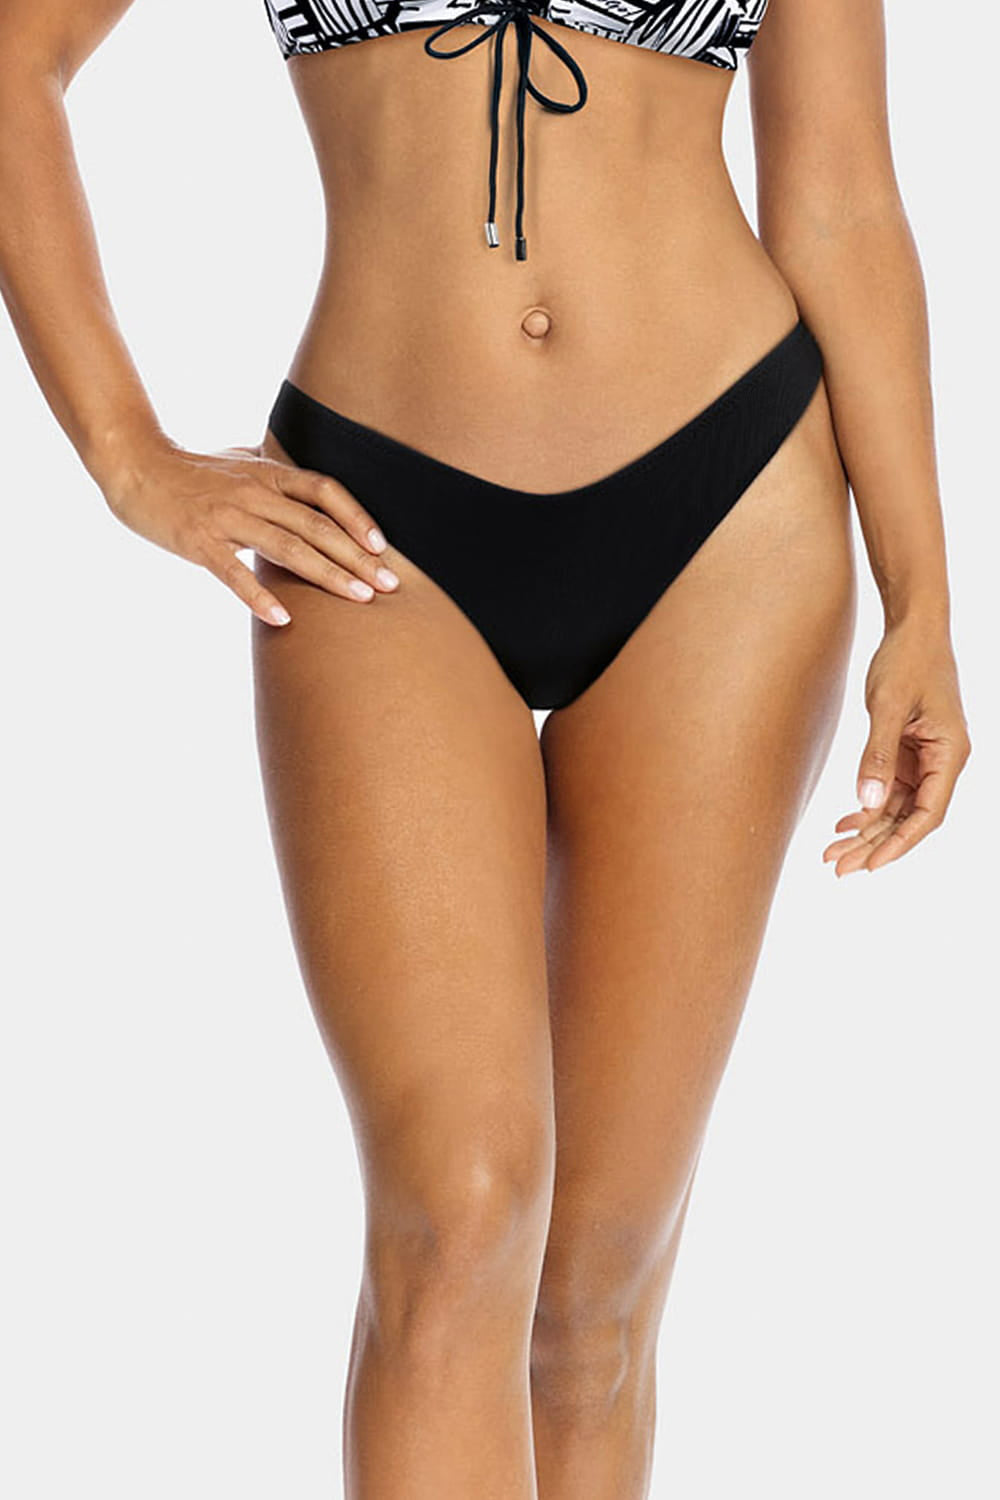 Axami Luxury Swimwear F50B Brazilian Bikini Bottom Black